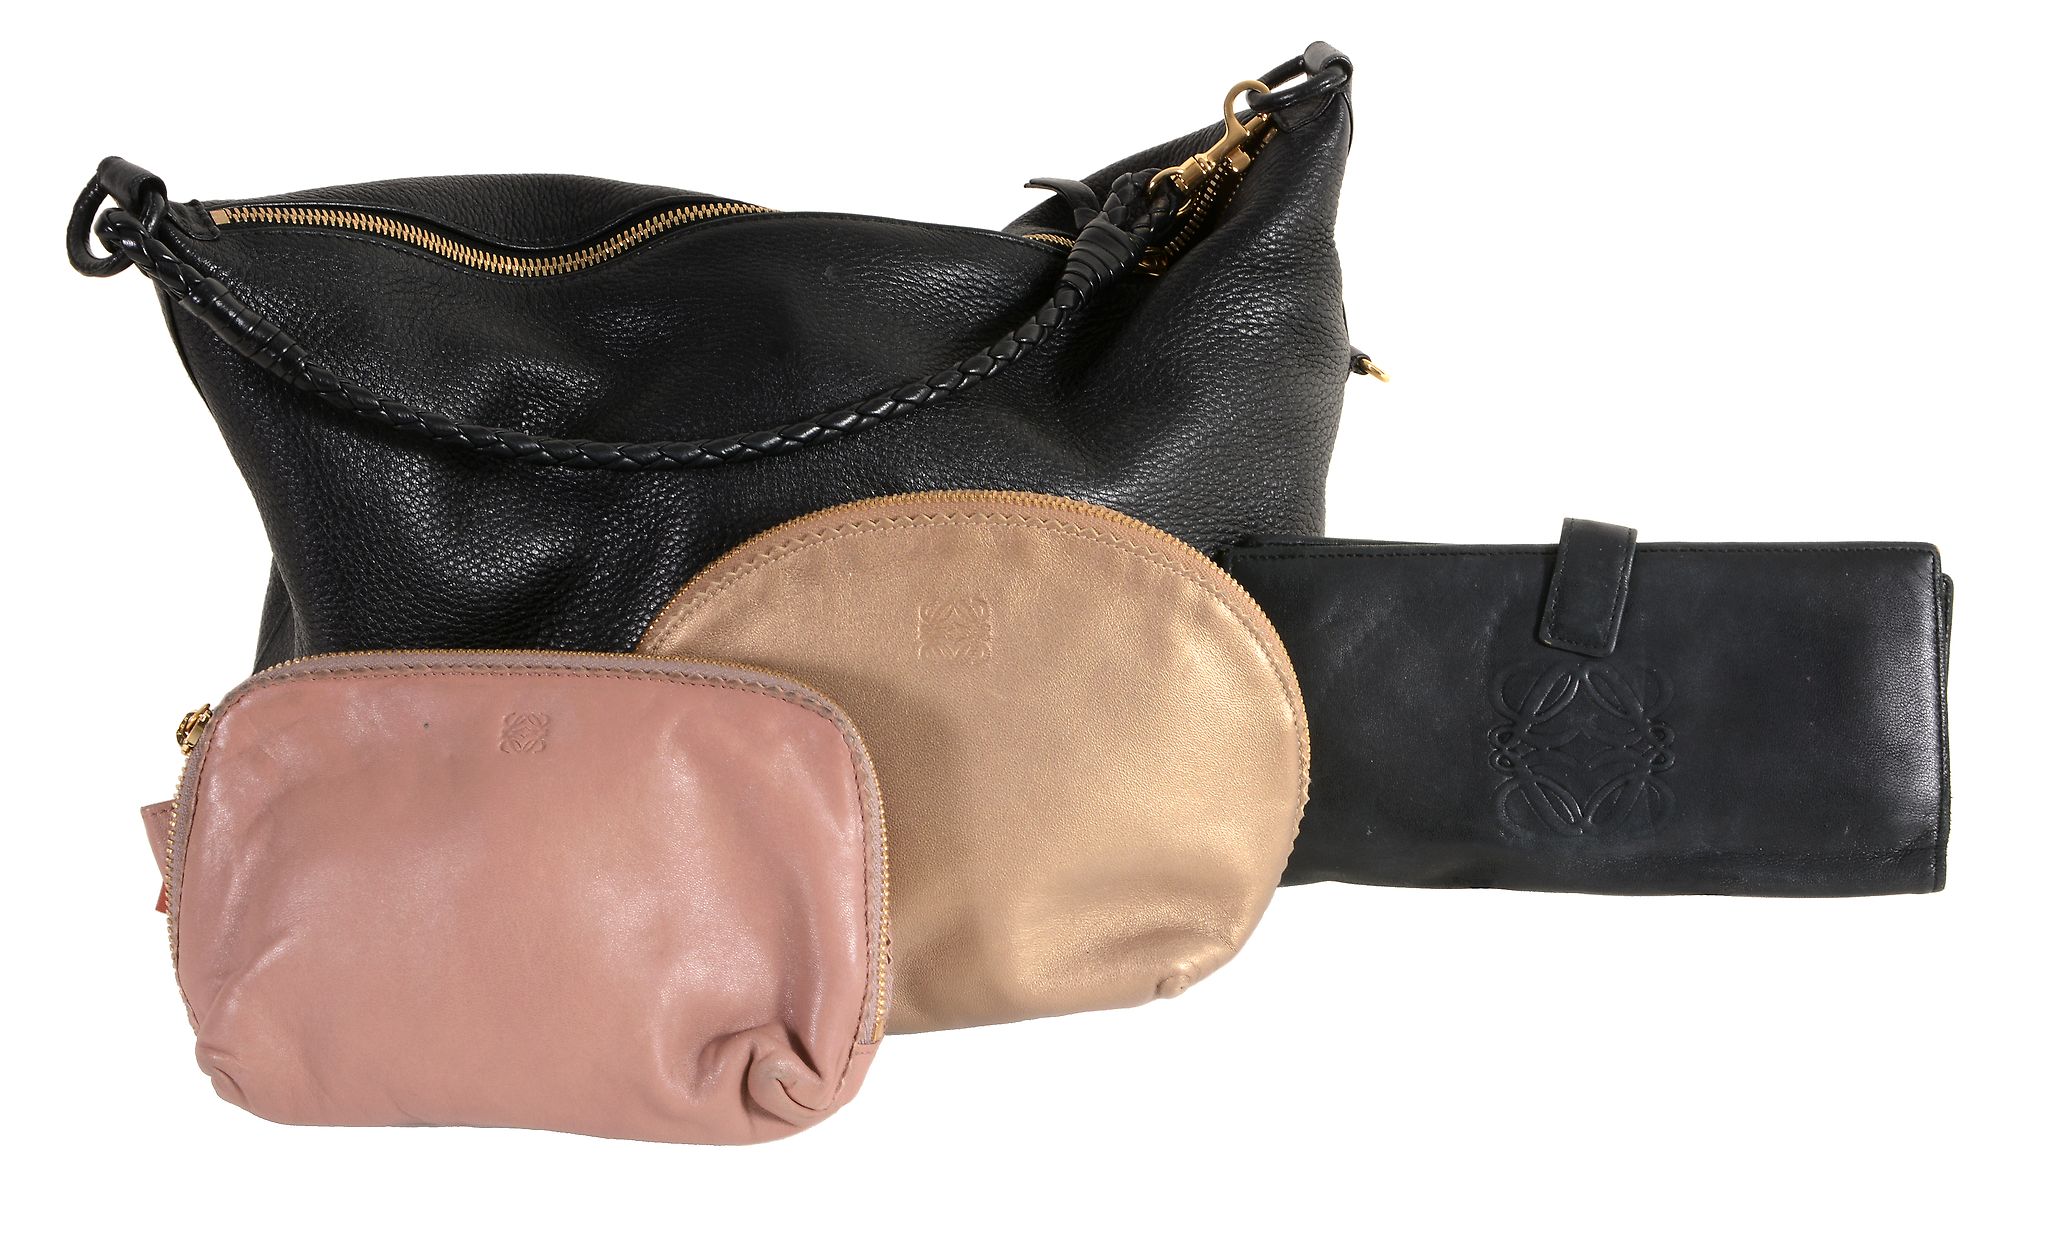 Bottega Veneta, a black leather handbag, with a plaited leather handle  Bottega Veneta, a black